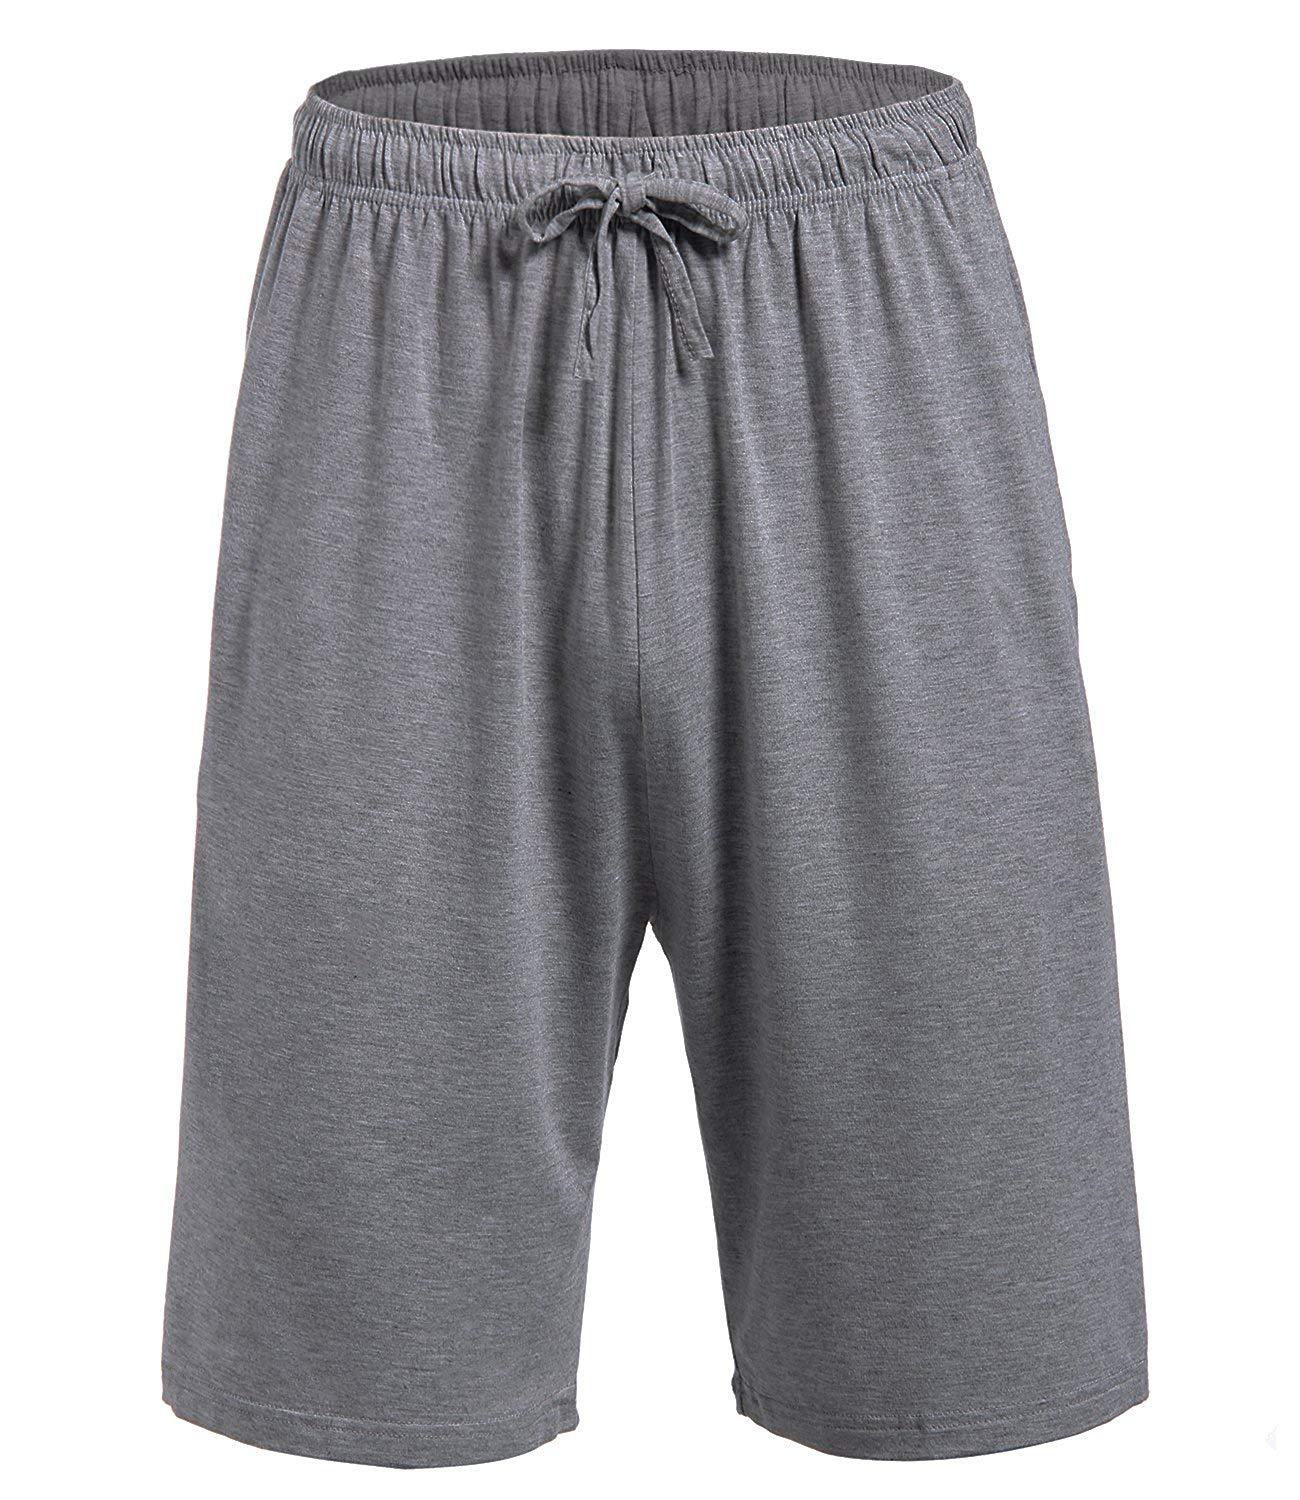 Men's Pajama Bottom Shorts - Latuza